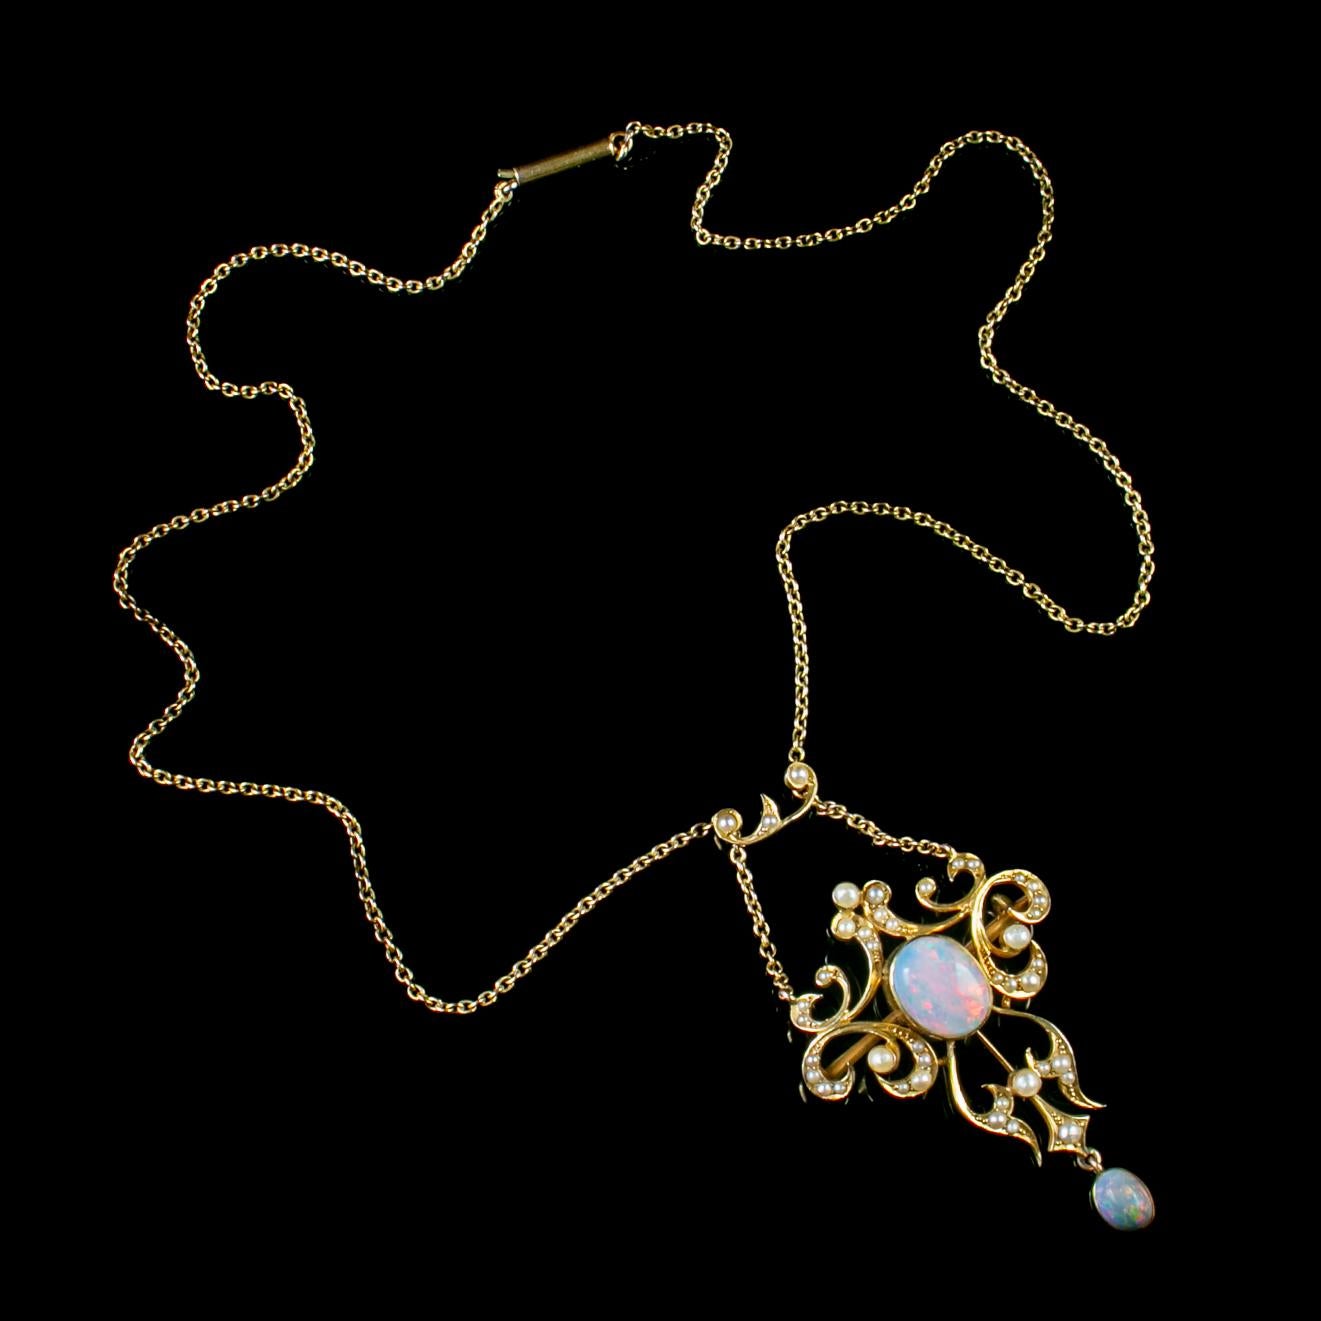 Antique Victorian Natural Opal Pendant Necklace 18 Carat Gold, circa 1880 For Sale 5